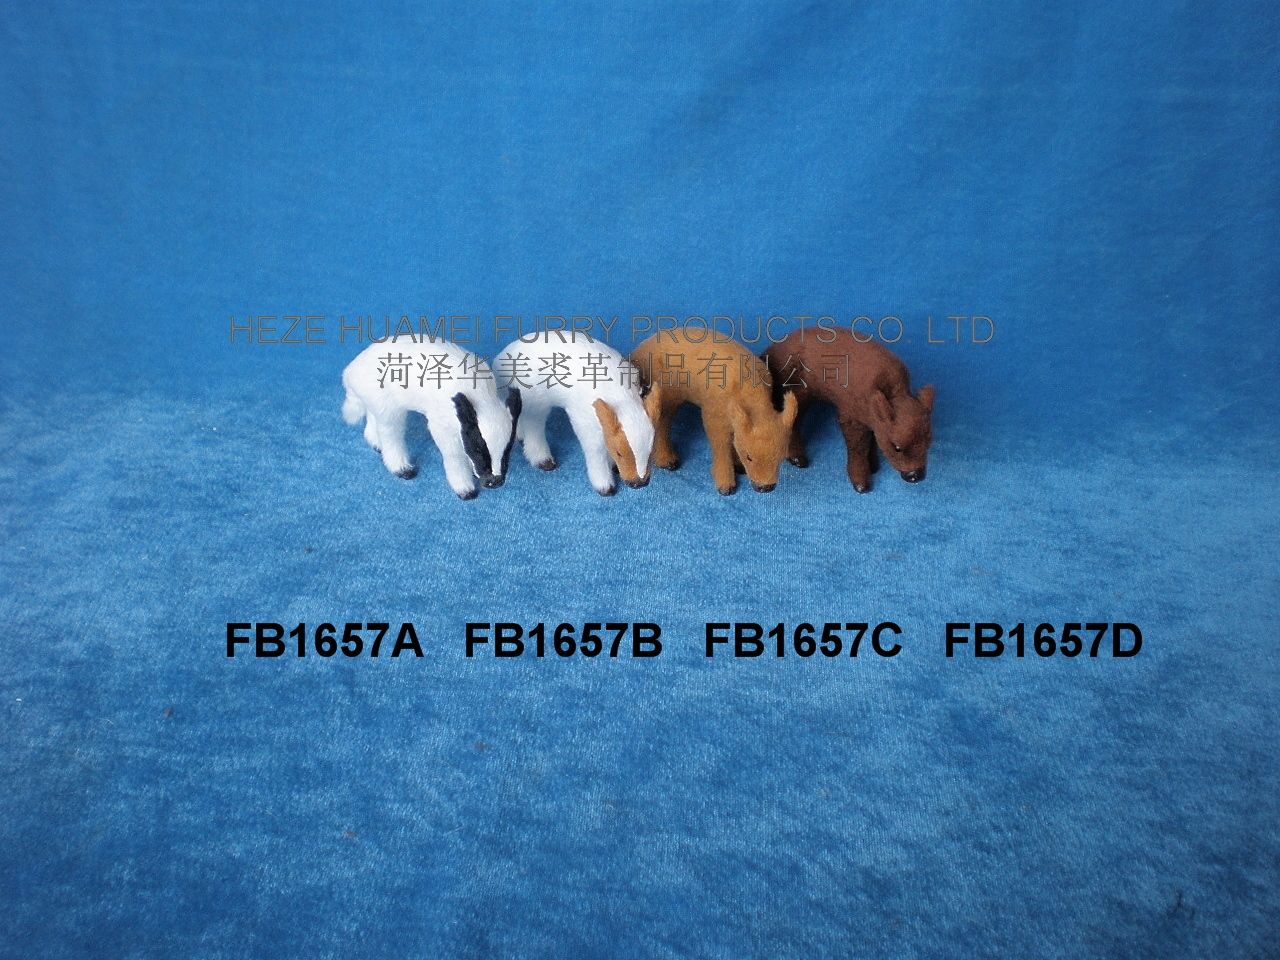 FB1657A   FB1657B   FB1657C    FB1657D,菏泽宇航裘革制品有限公司专业仿真皮毛动物生产厂家